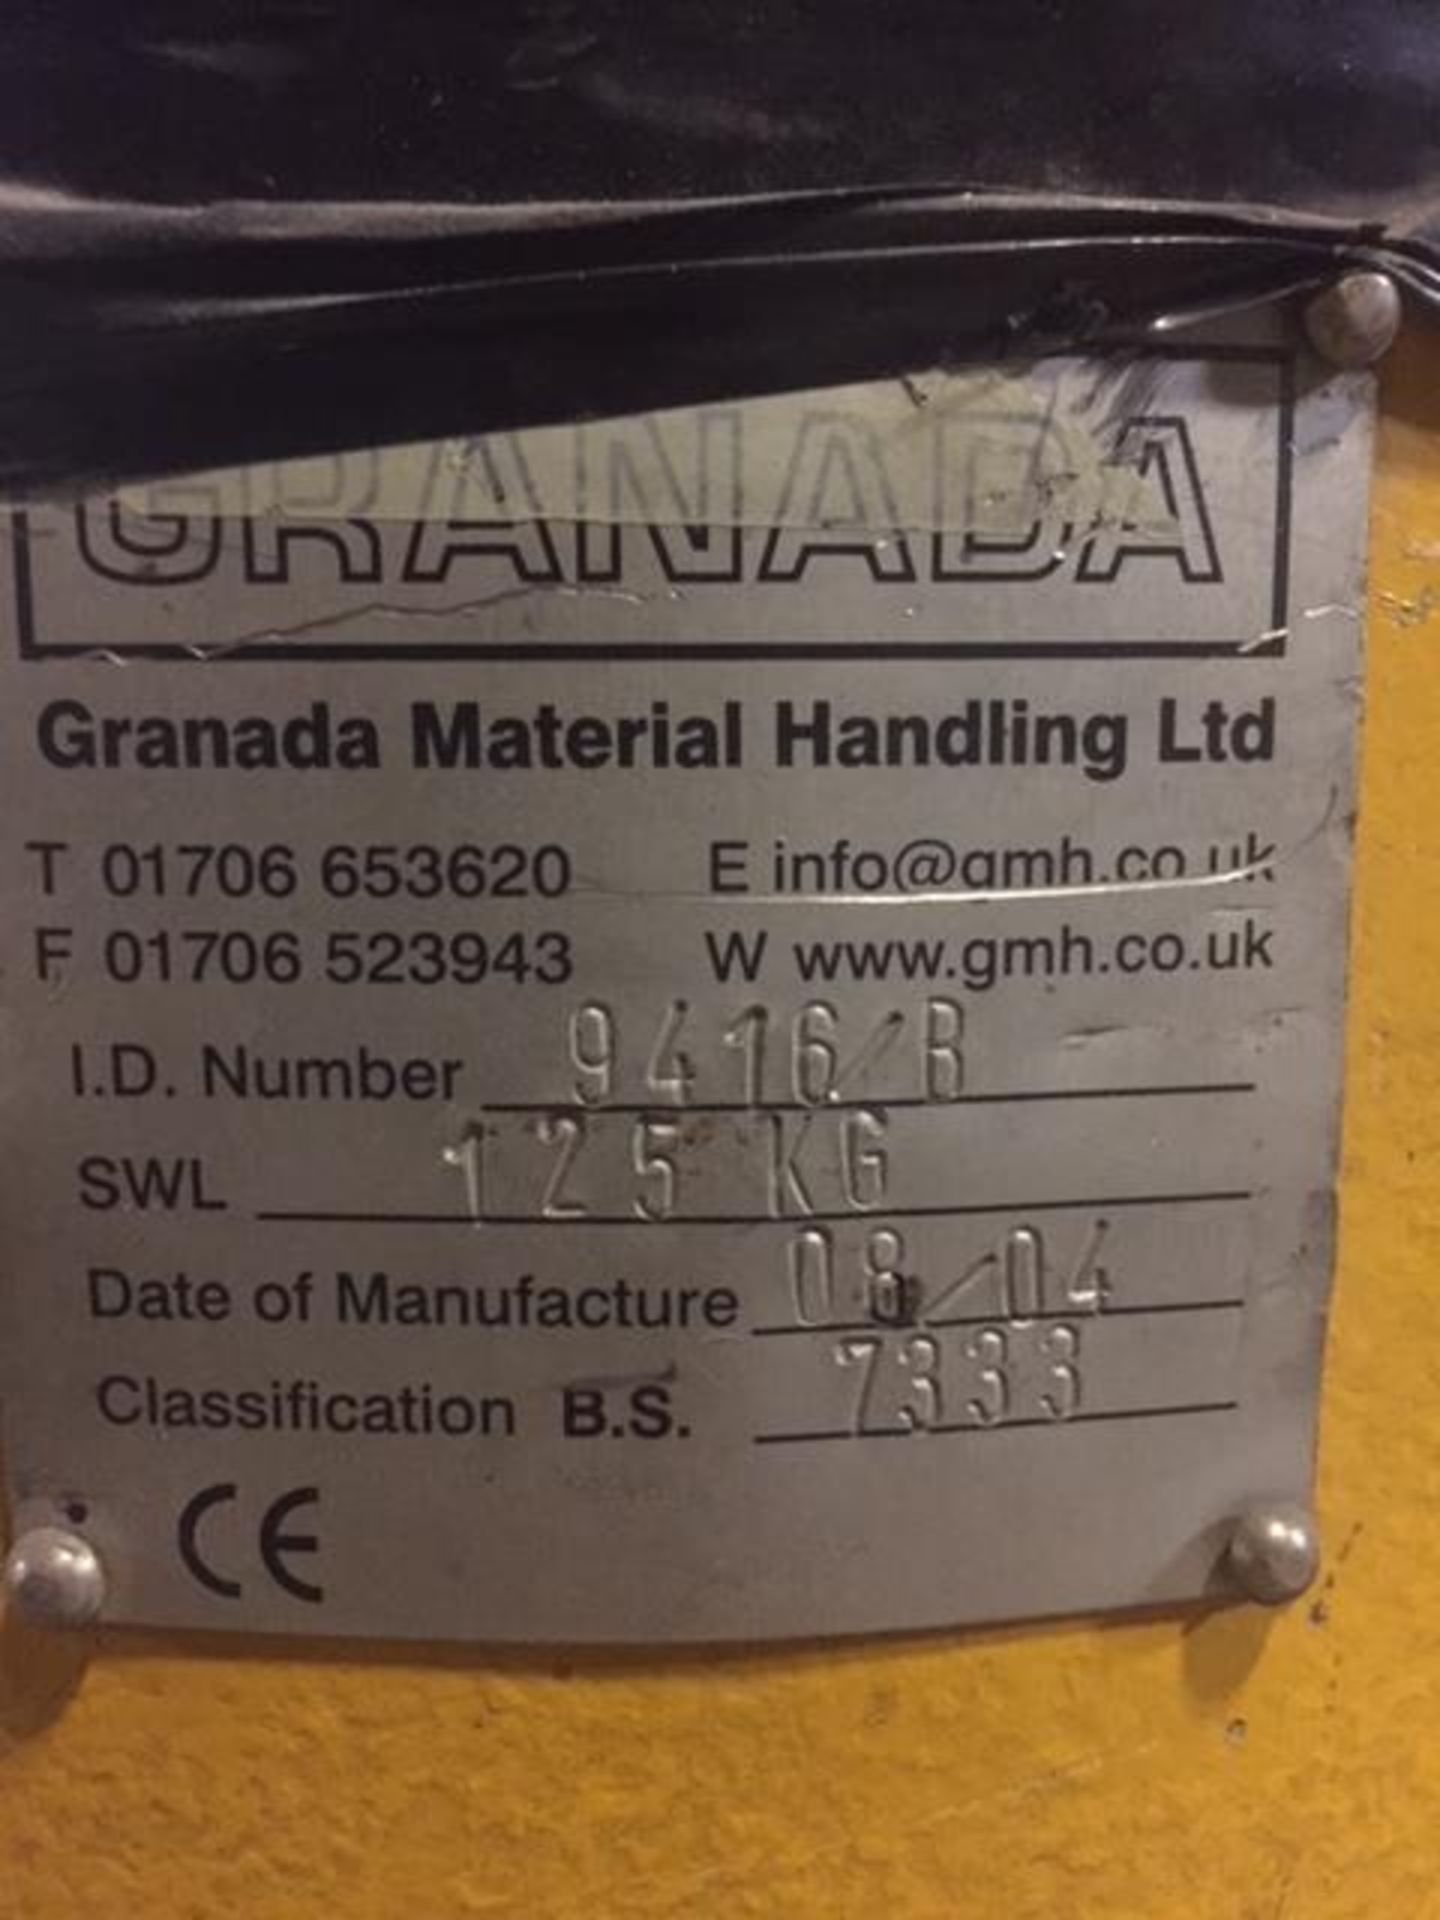 Granada swing jib pendant controlled crane, 125kg SWL, Serial No. 9416/B, Date 08/04 - Image 3 of 3